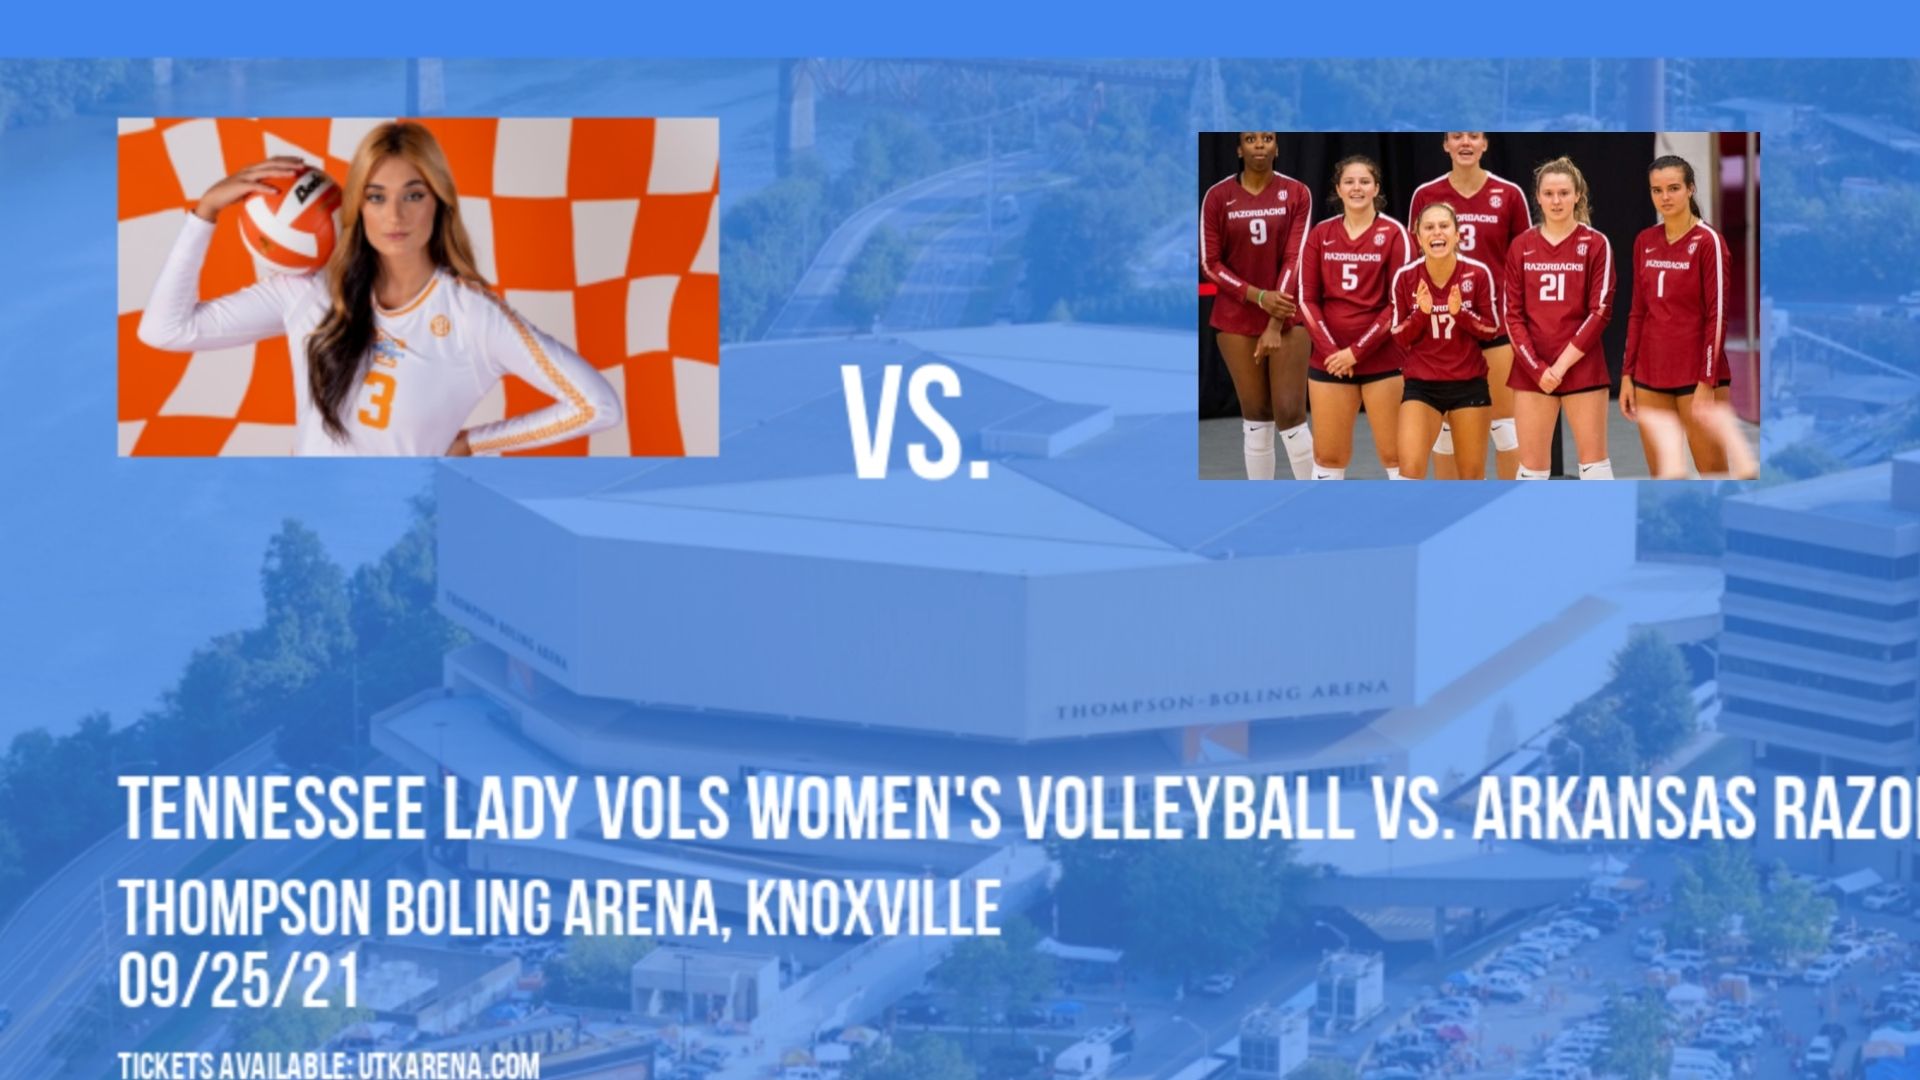 Tennessee Lady Vols Women's Volleyball vs. Arkansas Razorbacks at Thompson Boling Arena